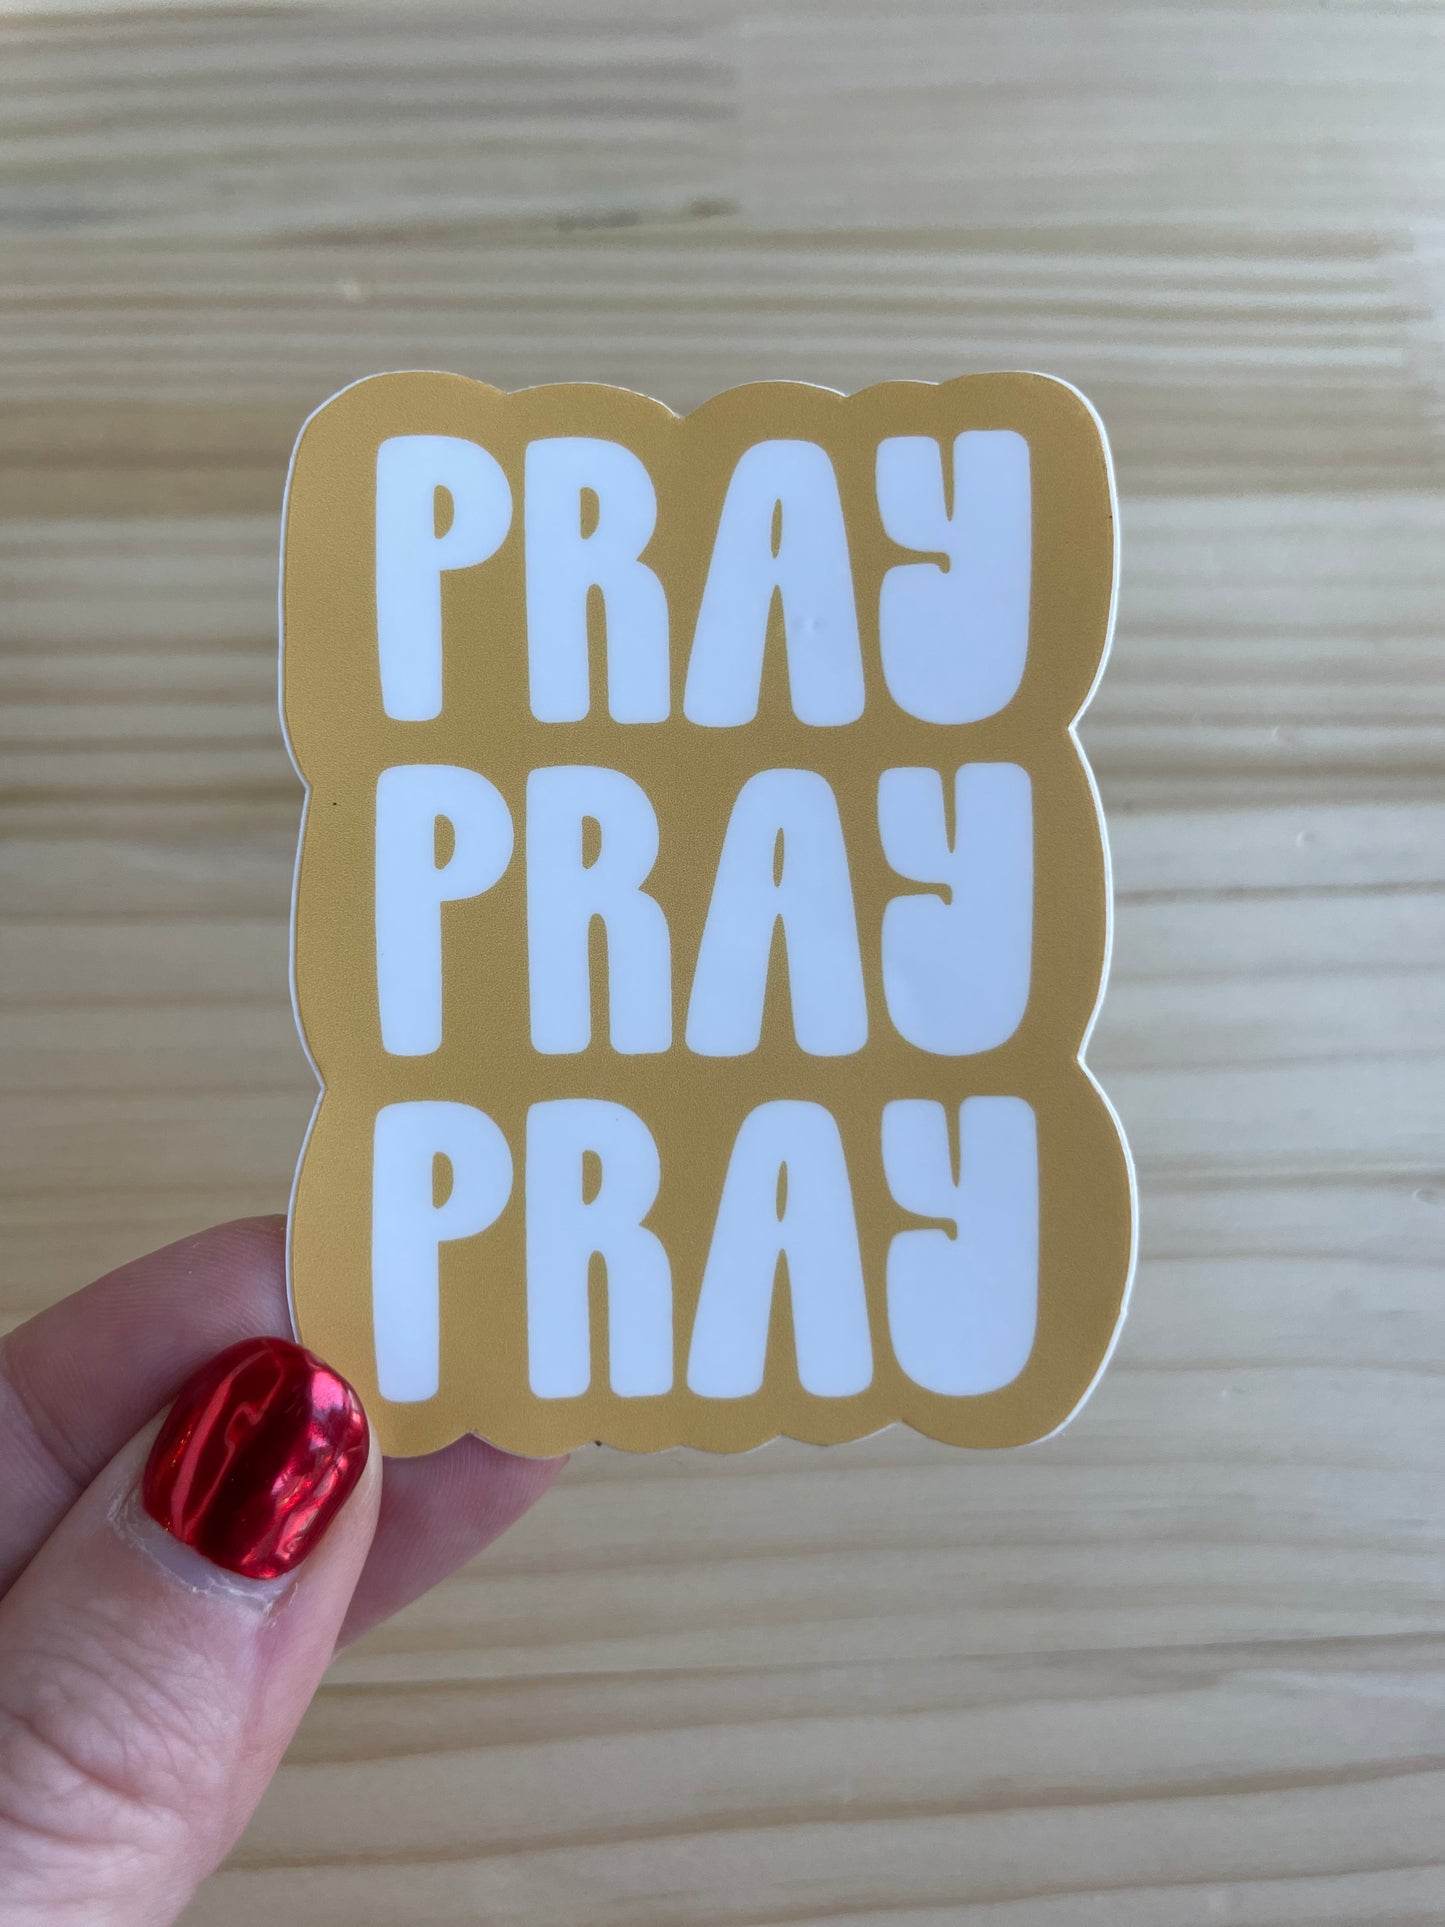 Pray Sticker